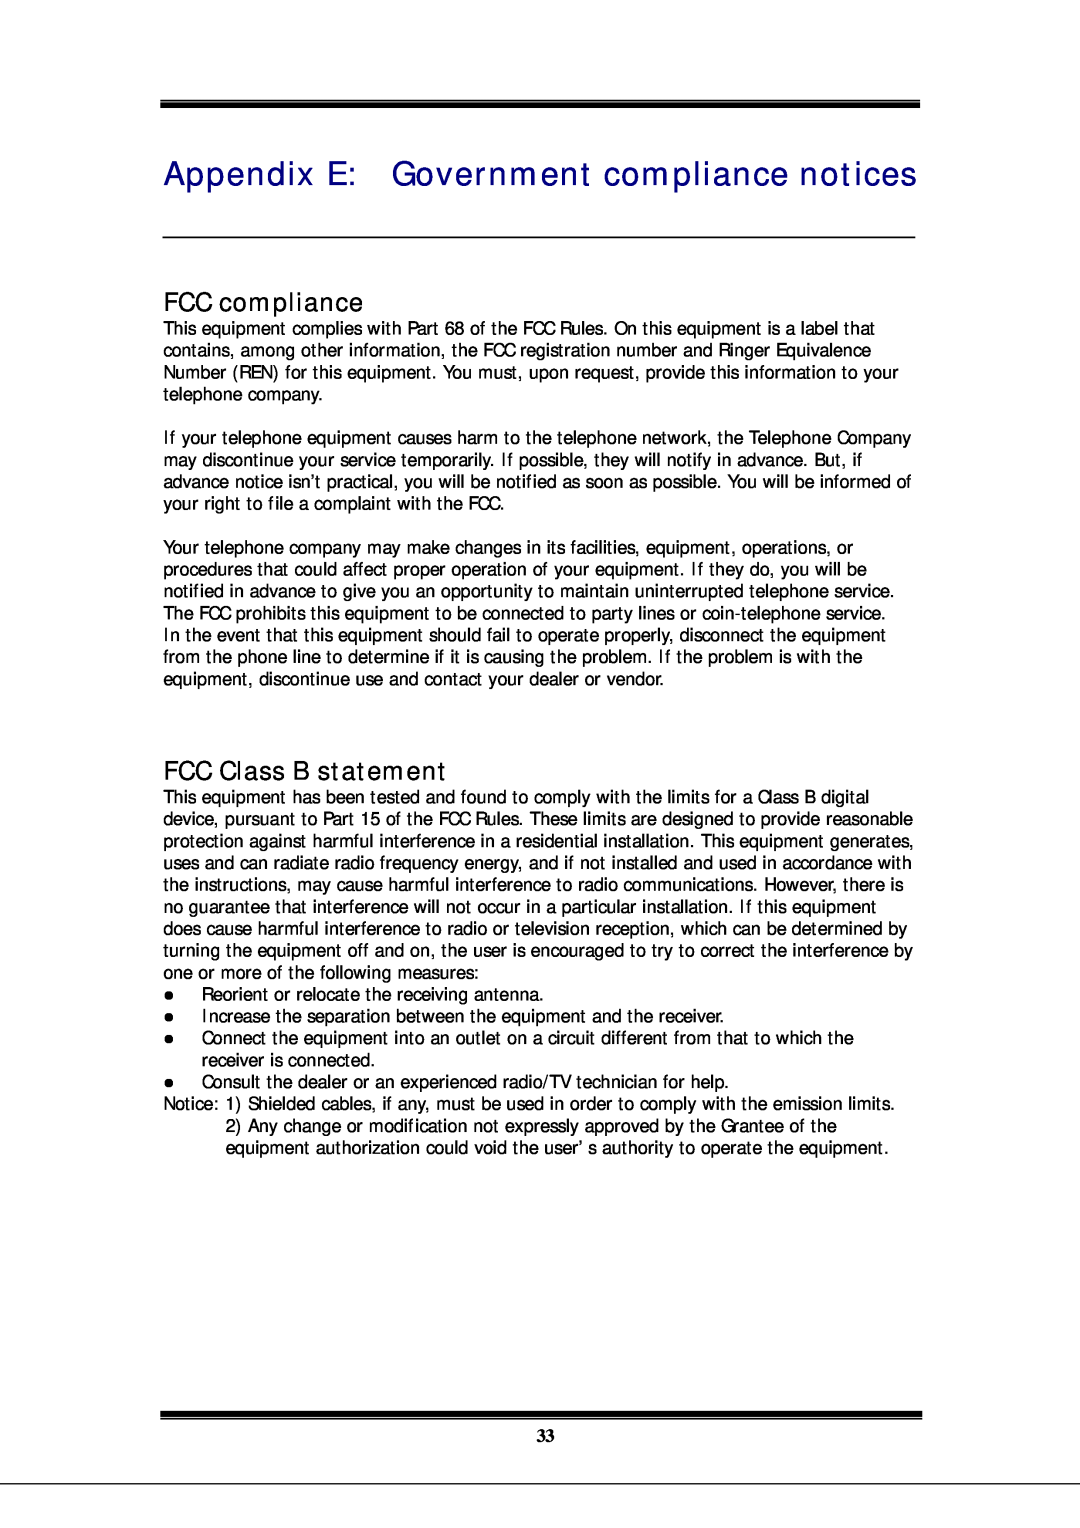 Microsoft EA900 manual Appendix E Government compliance notices, FCC compliance, FCC Class B statement 